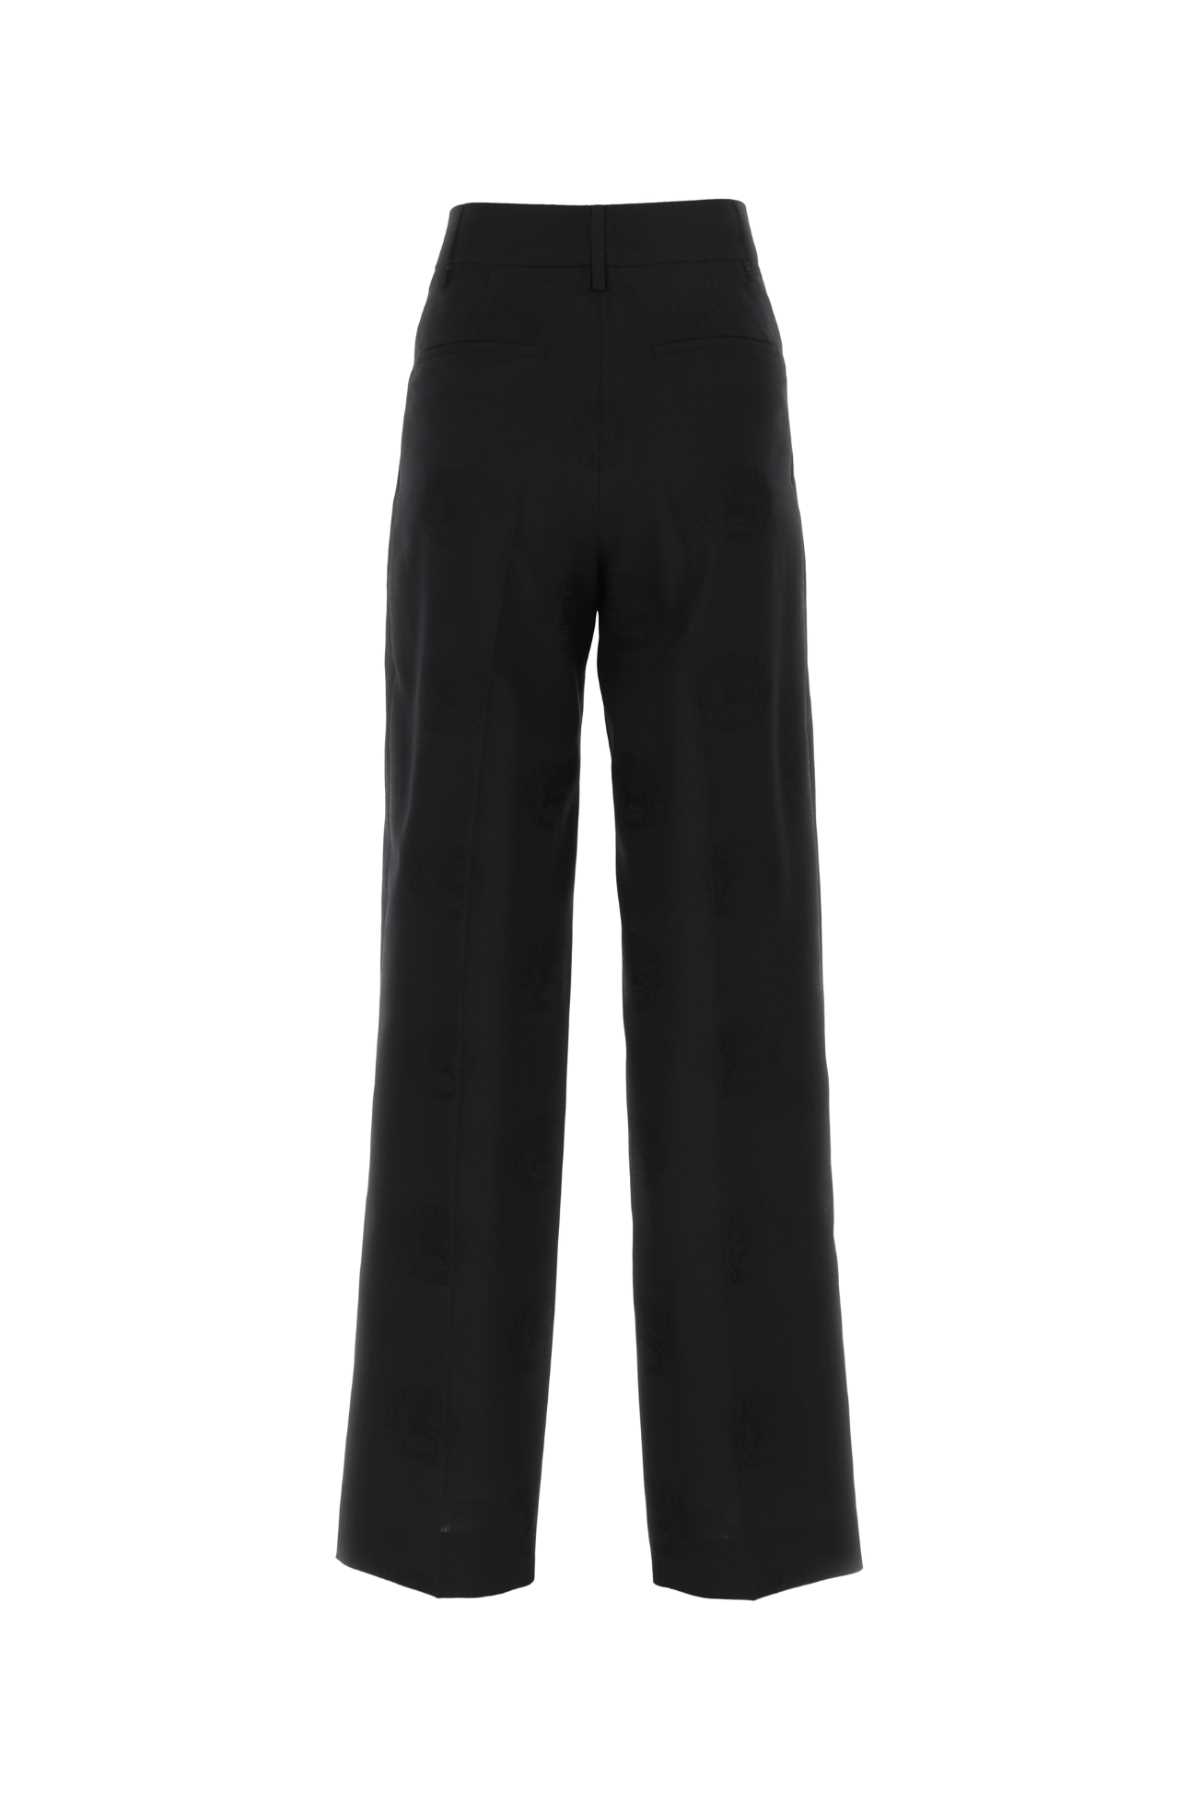 Burberry Black Wool Blend Wide-leg Trouser In A1931